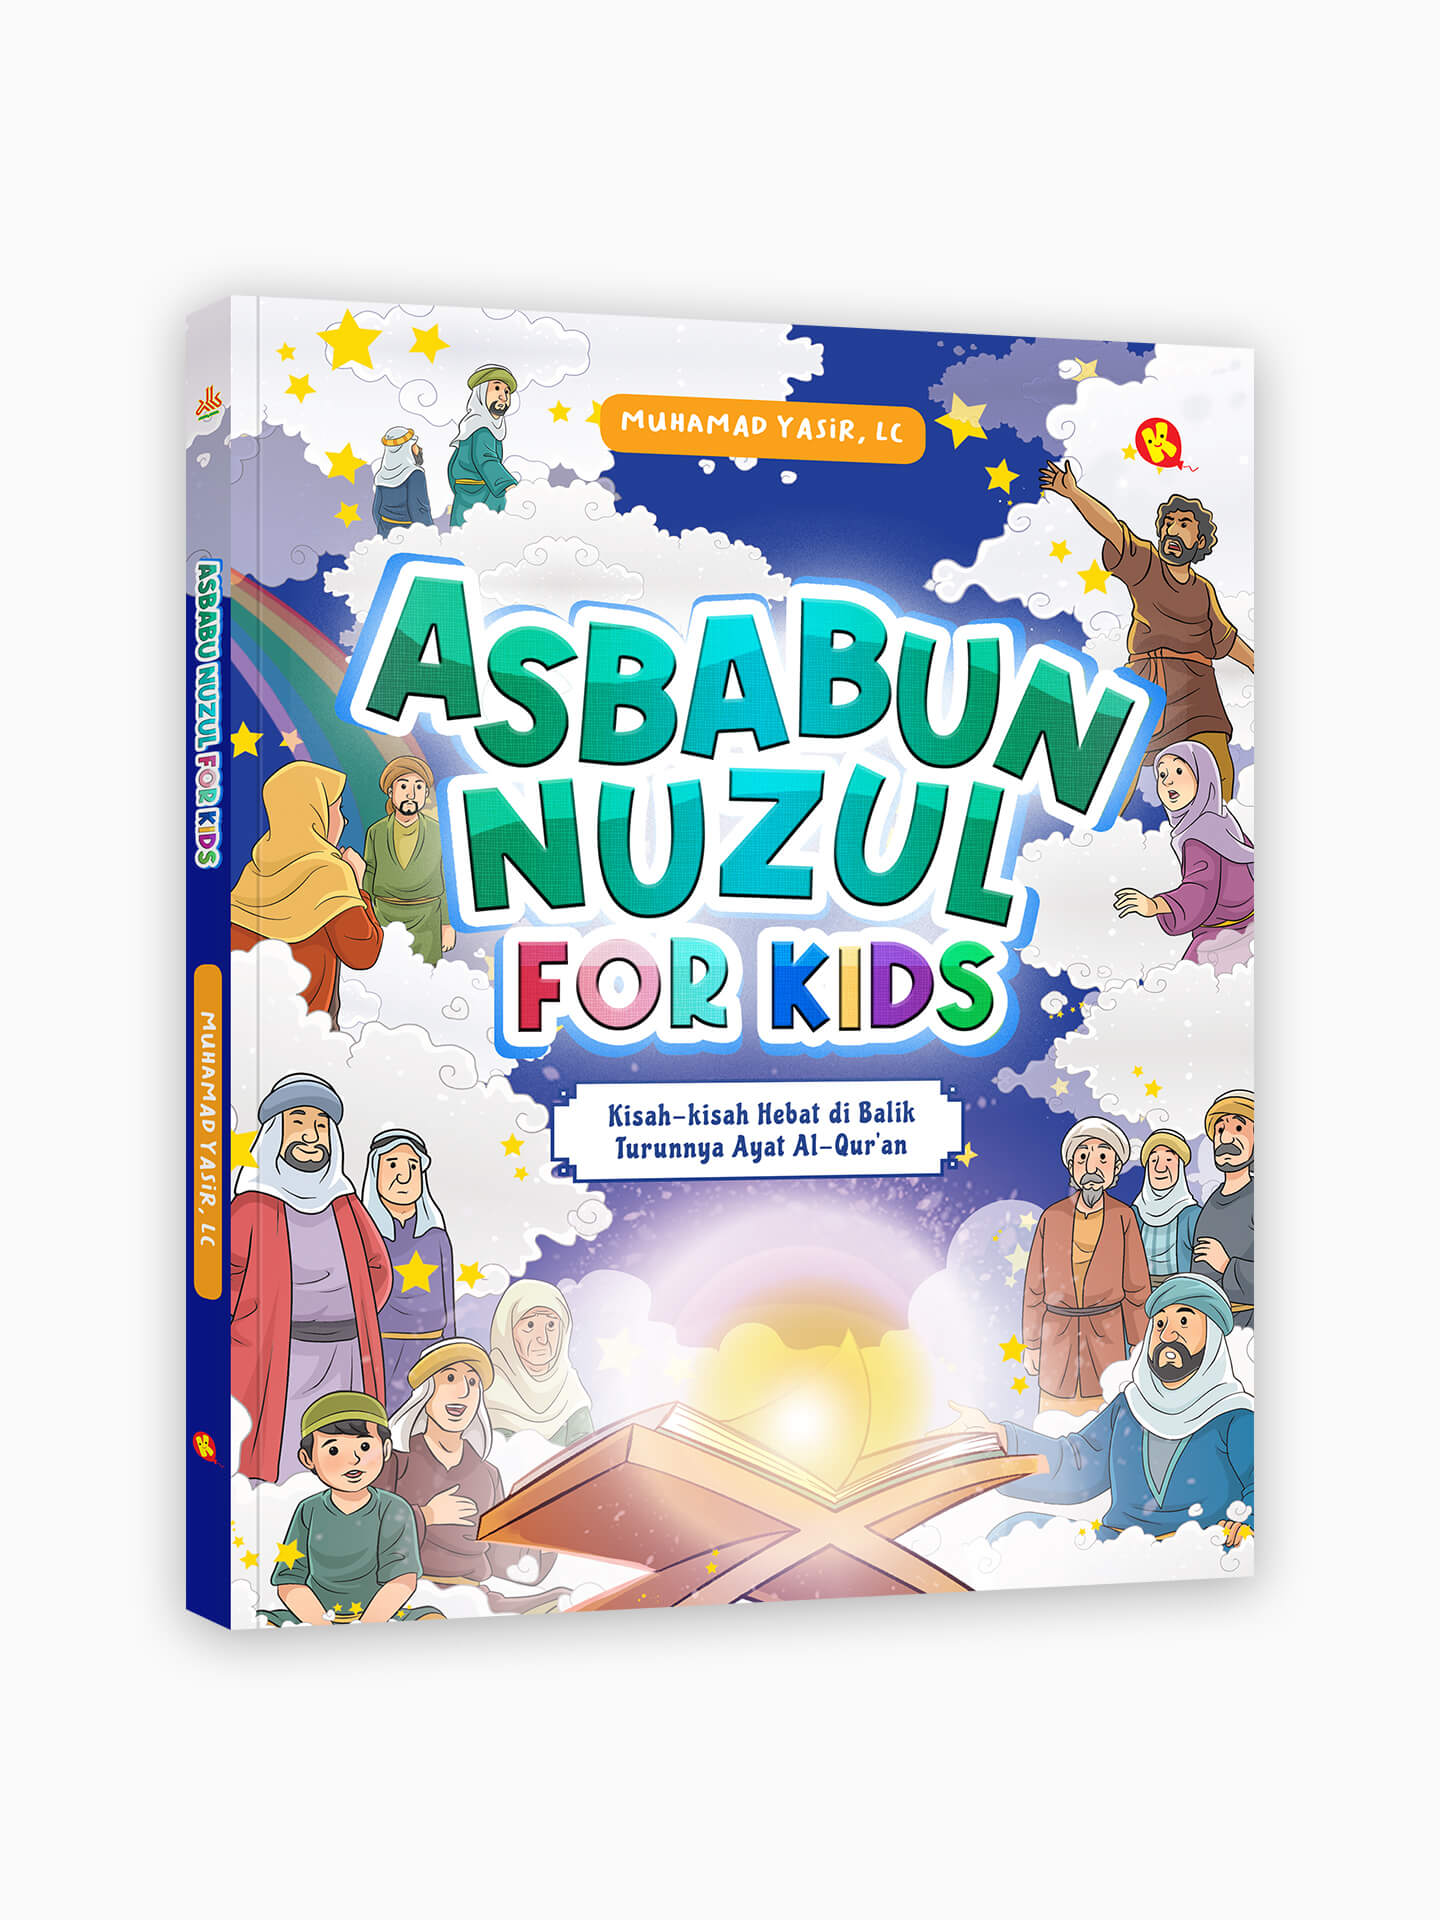 Asbabun Nuzul for Kids : Kisah-kisah Hebat di Balik Turunnya Ayat Al-Qur’an